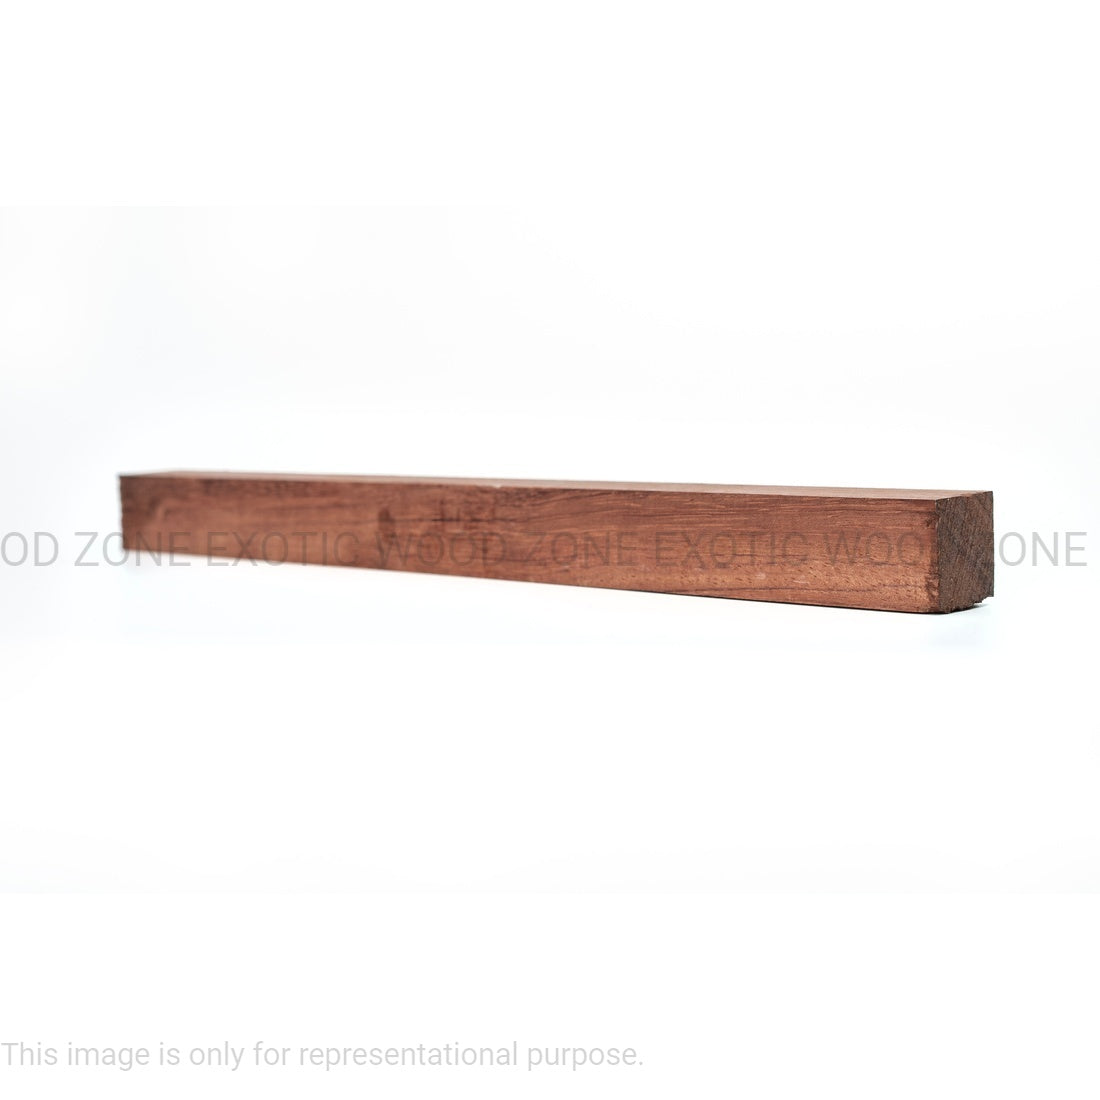 Pack of 2, Bubinga Hobby Wood/ Turning Wood Blanks 1 x 1 x 18 inches - Exotic Wood Zone - Buy online Across USA 